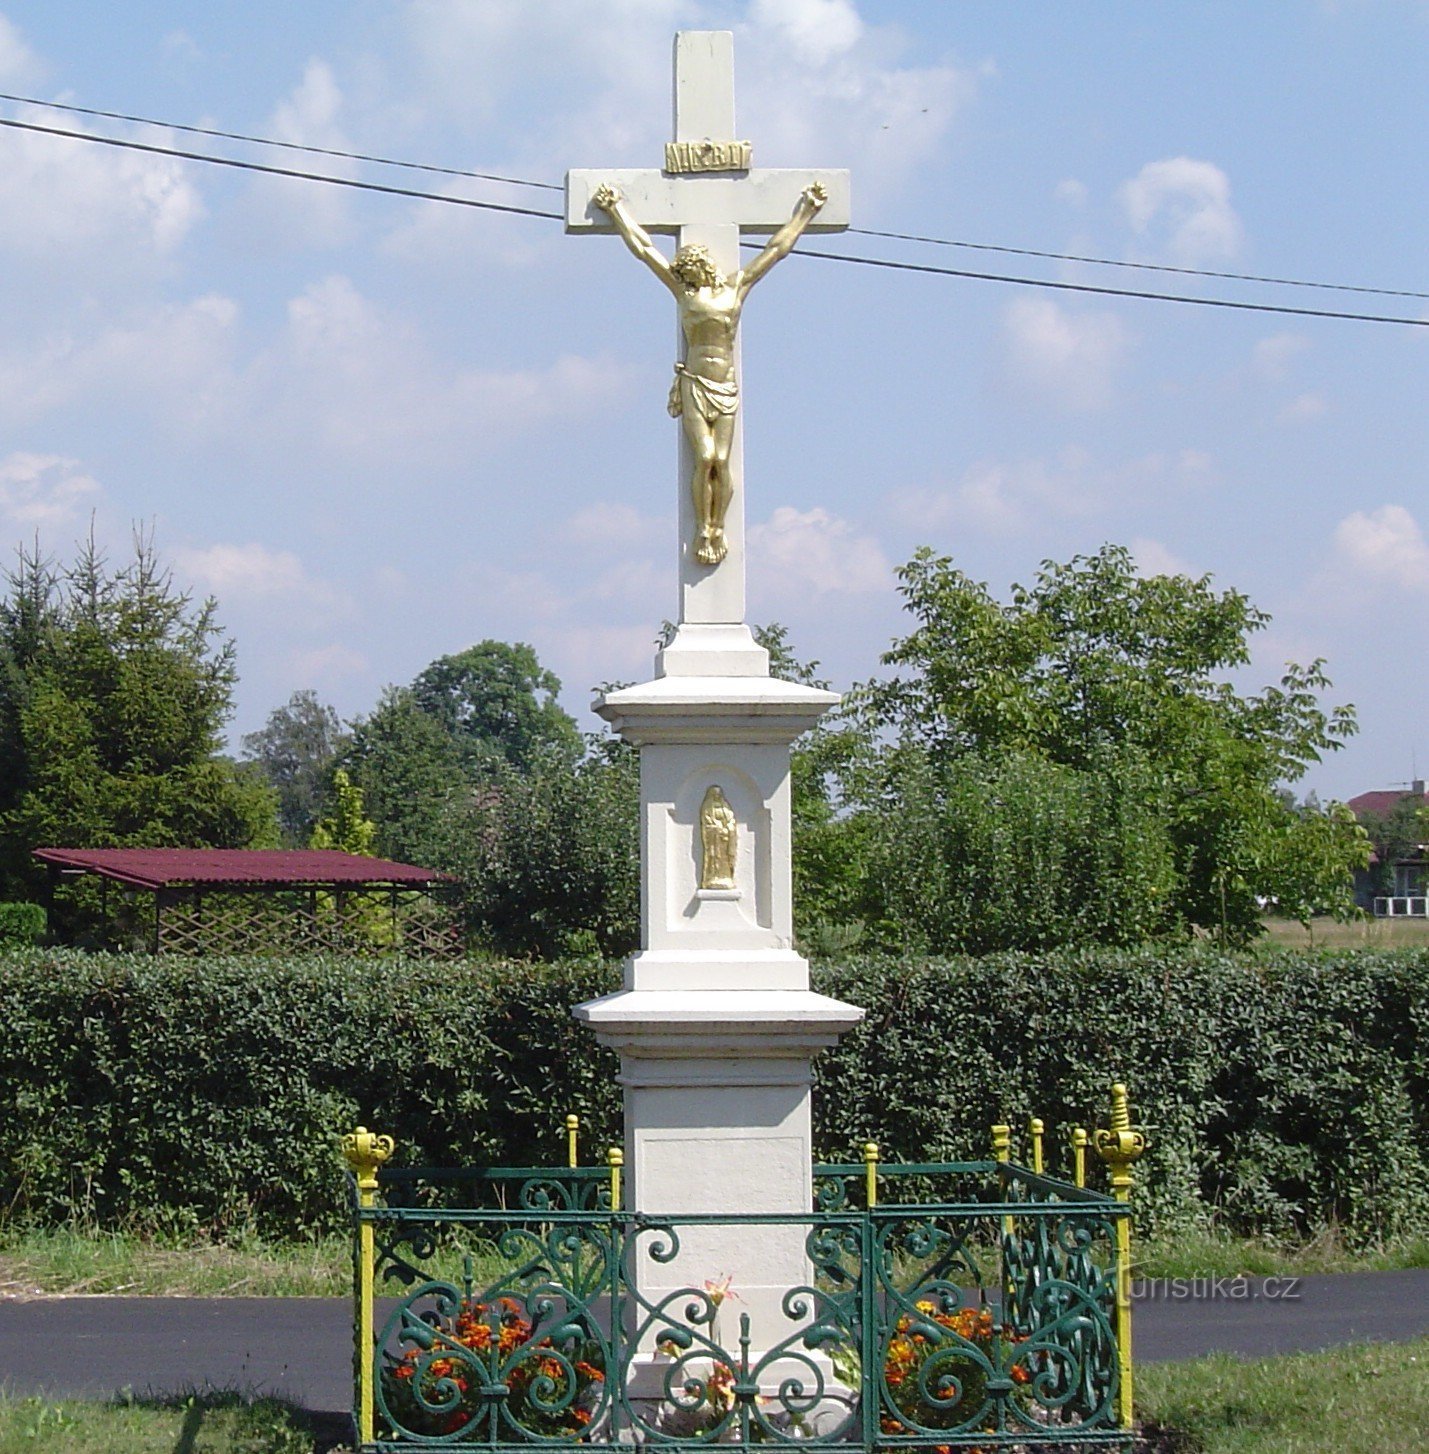 Crucea Bohumín-Šunychl la răscruce